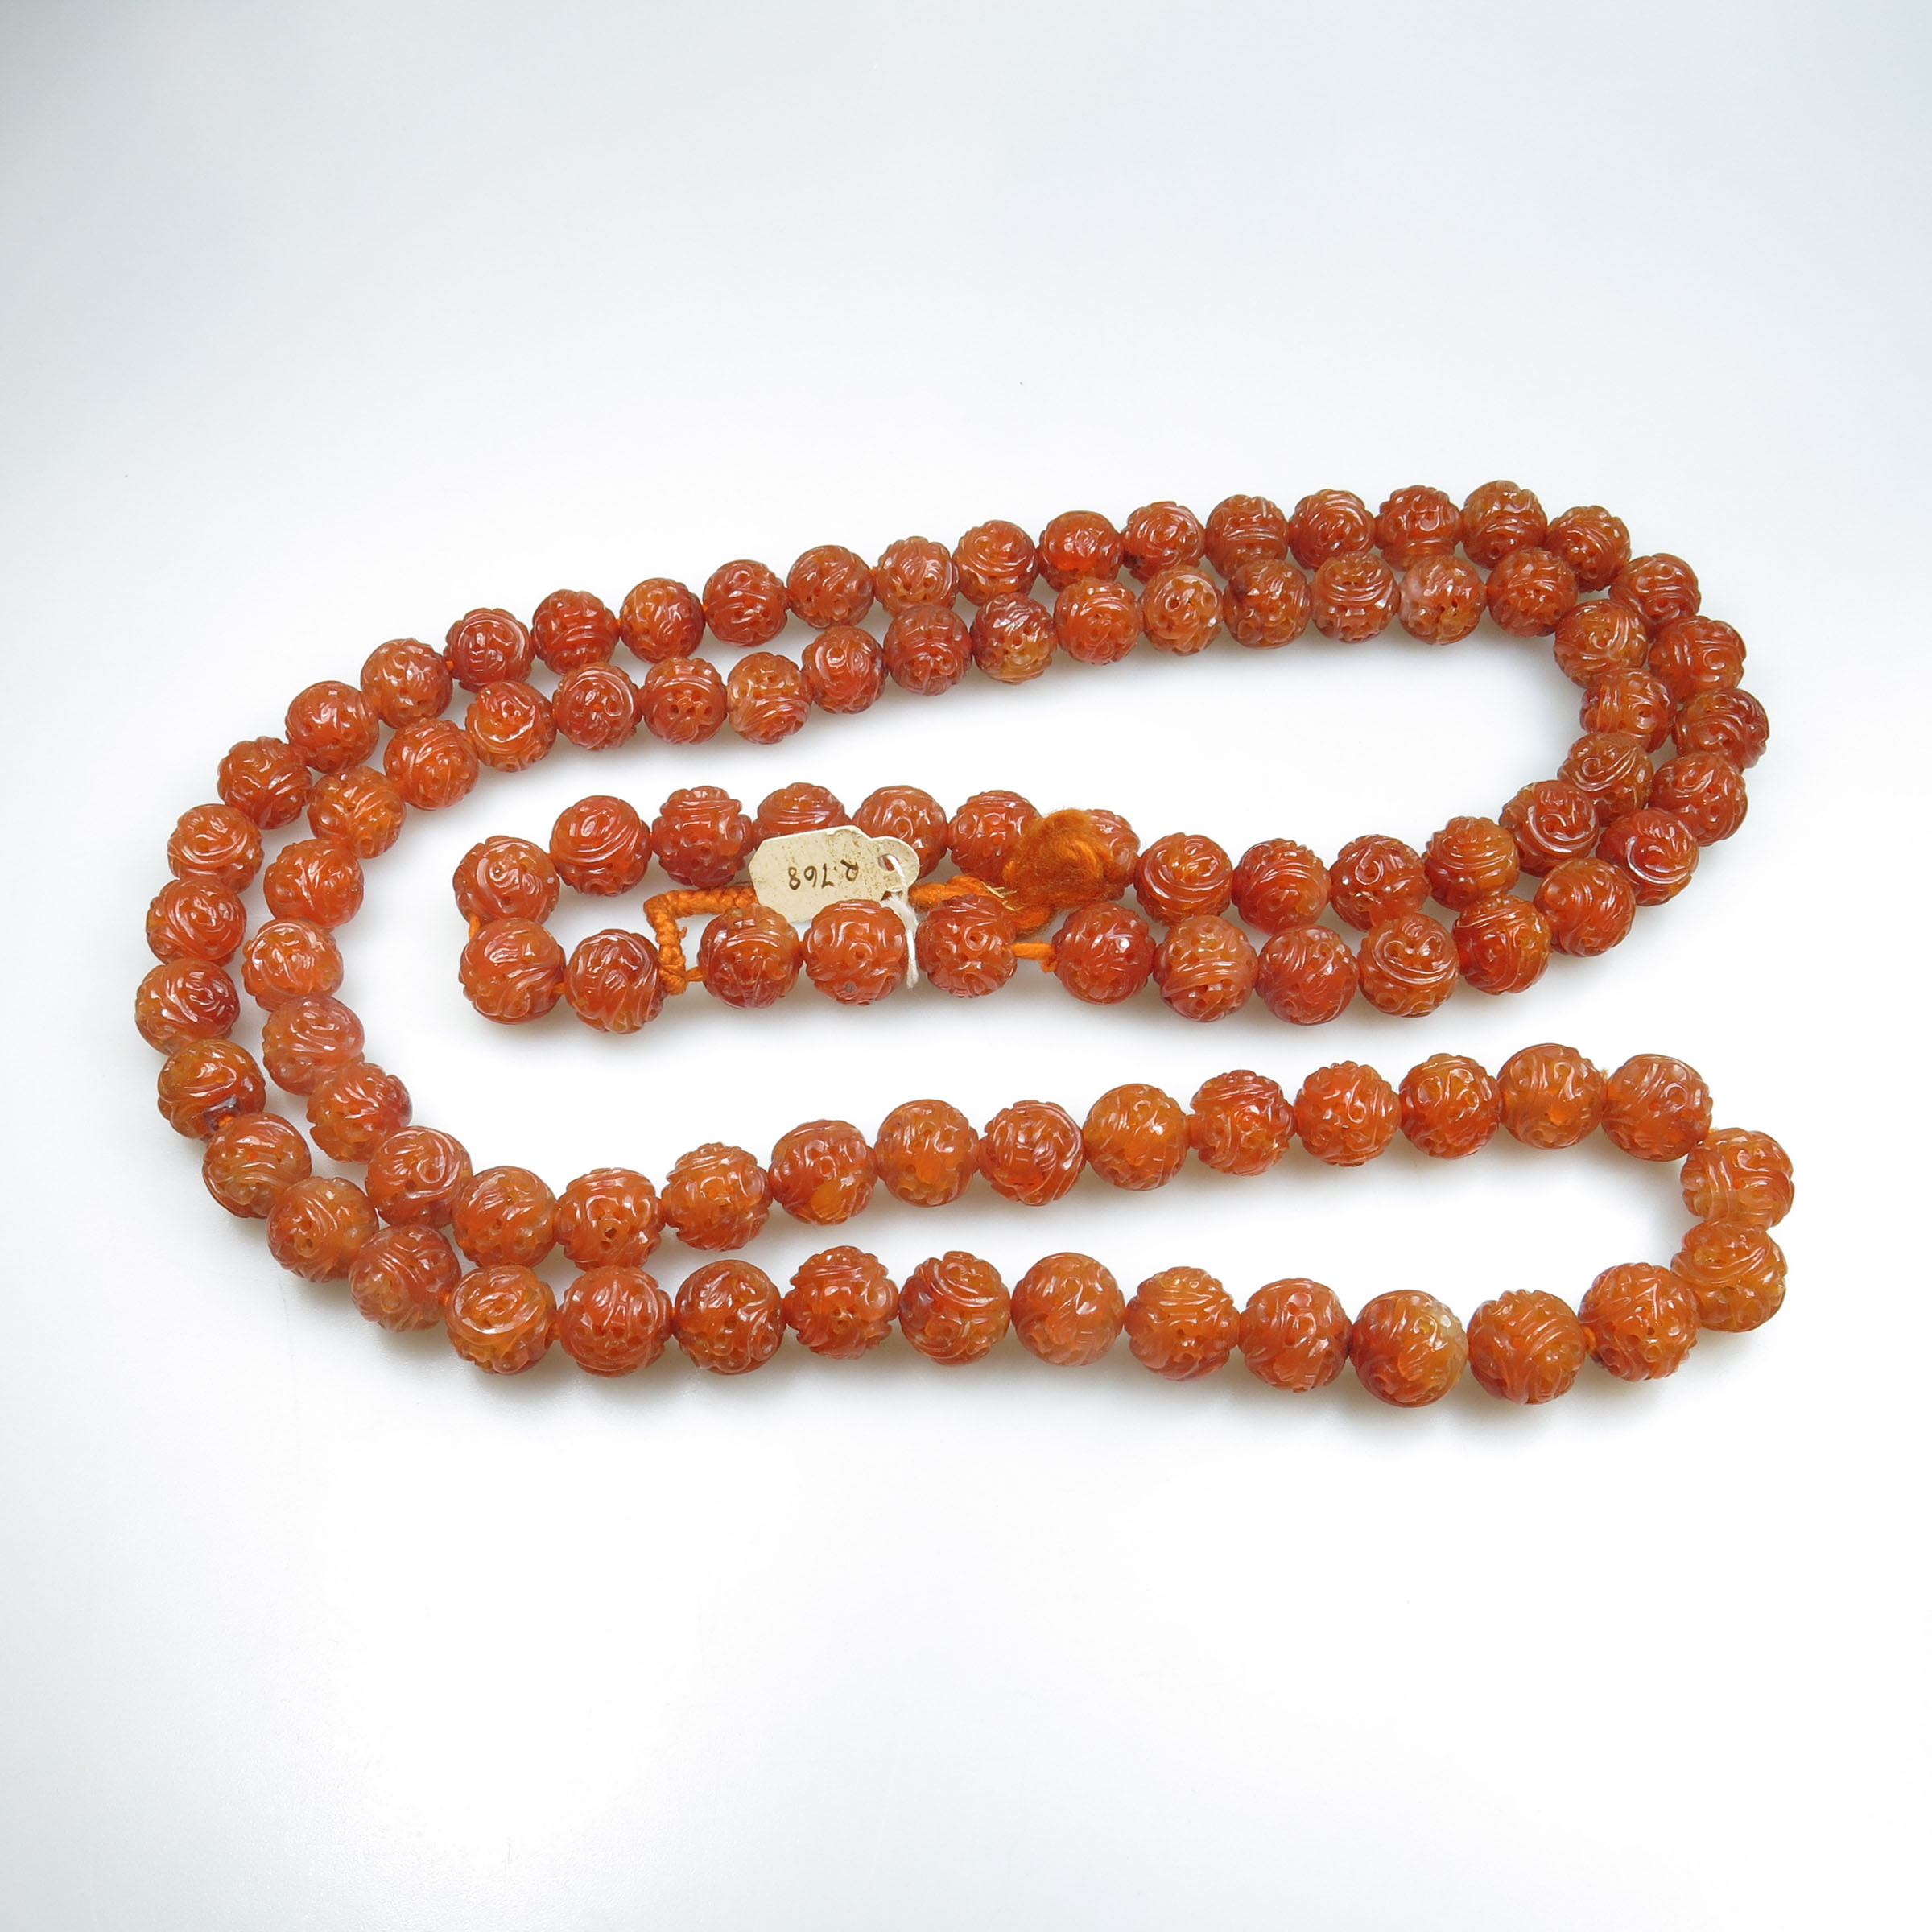 Single Strand Of Carved And Pierced Carnelian Beads